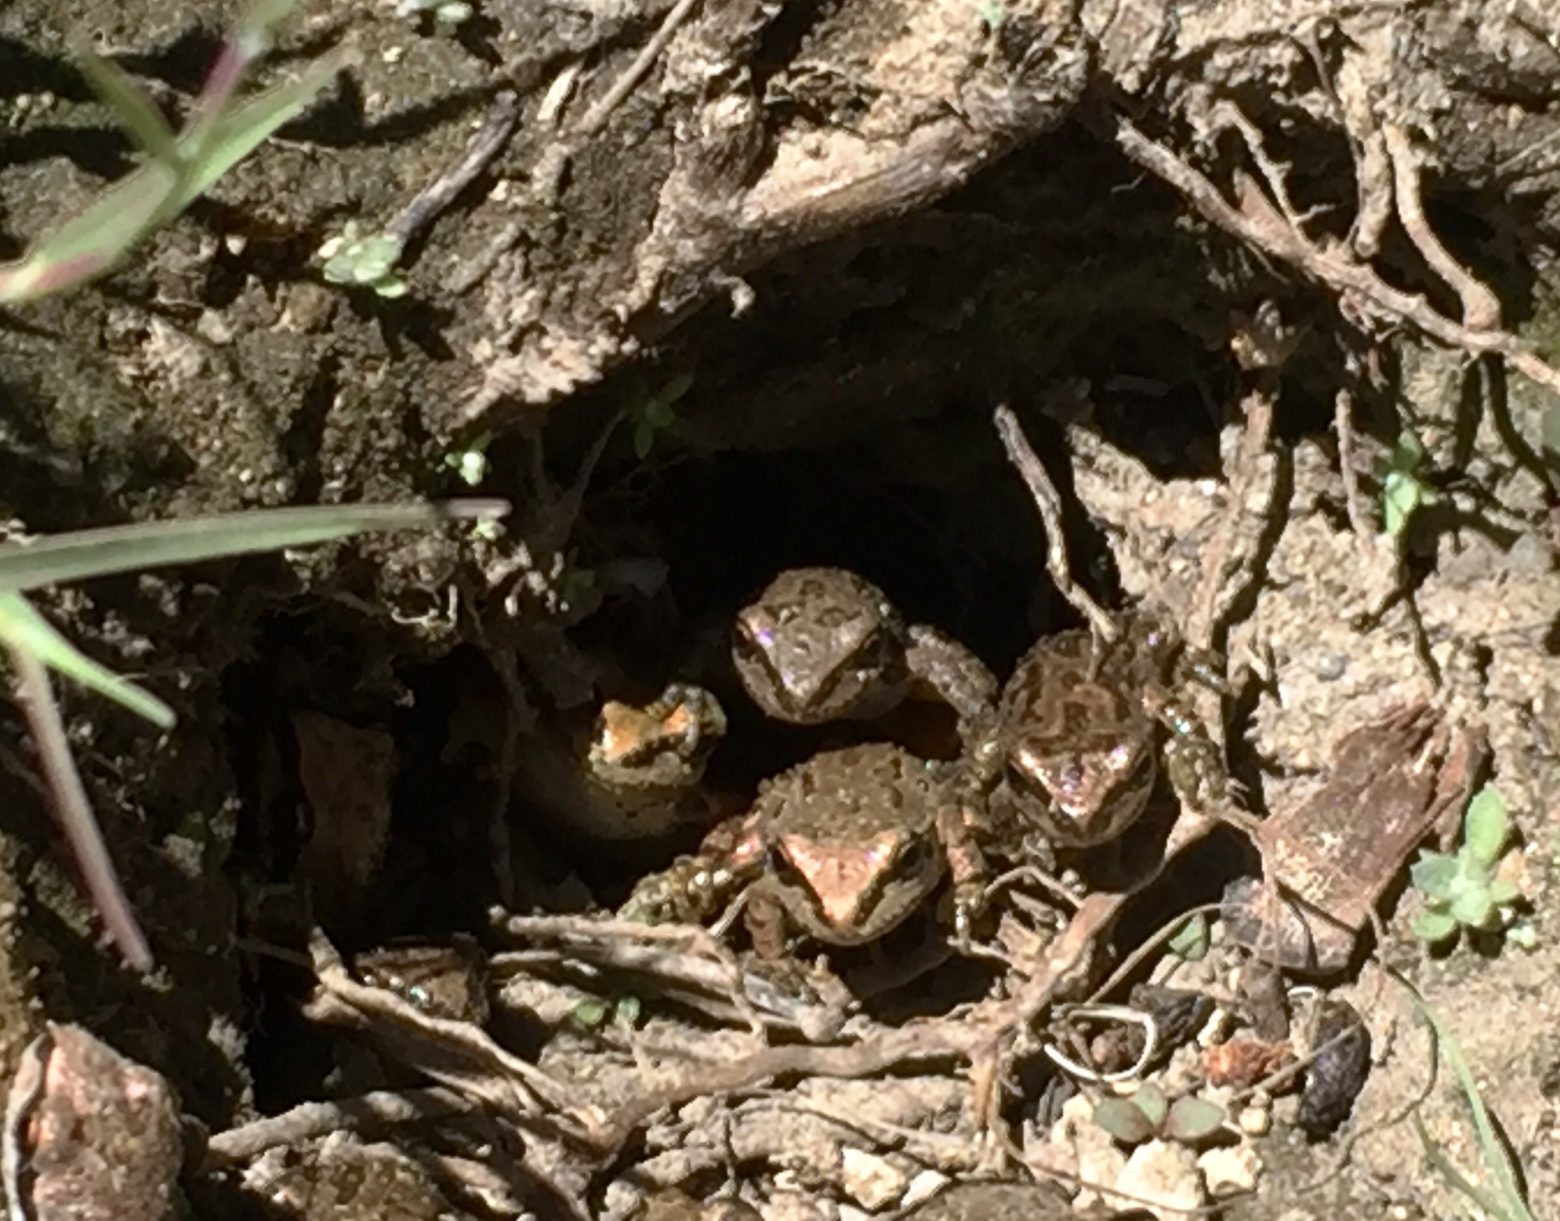 A cluster of tiny toads huddling together